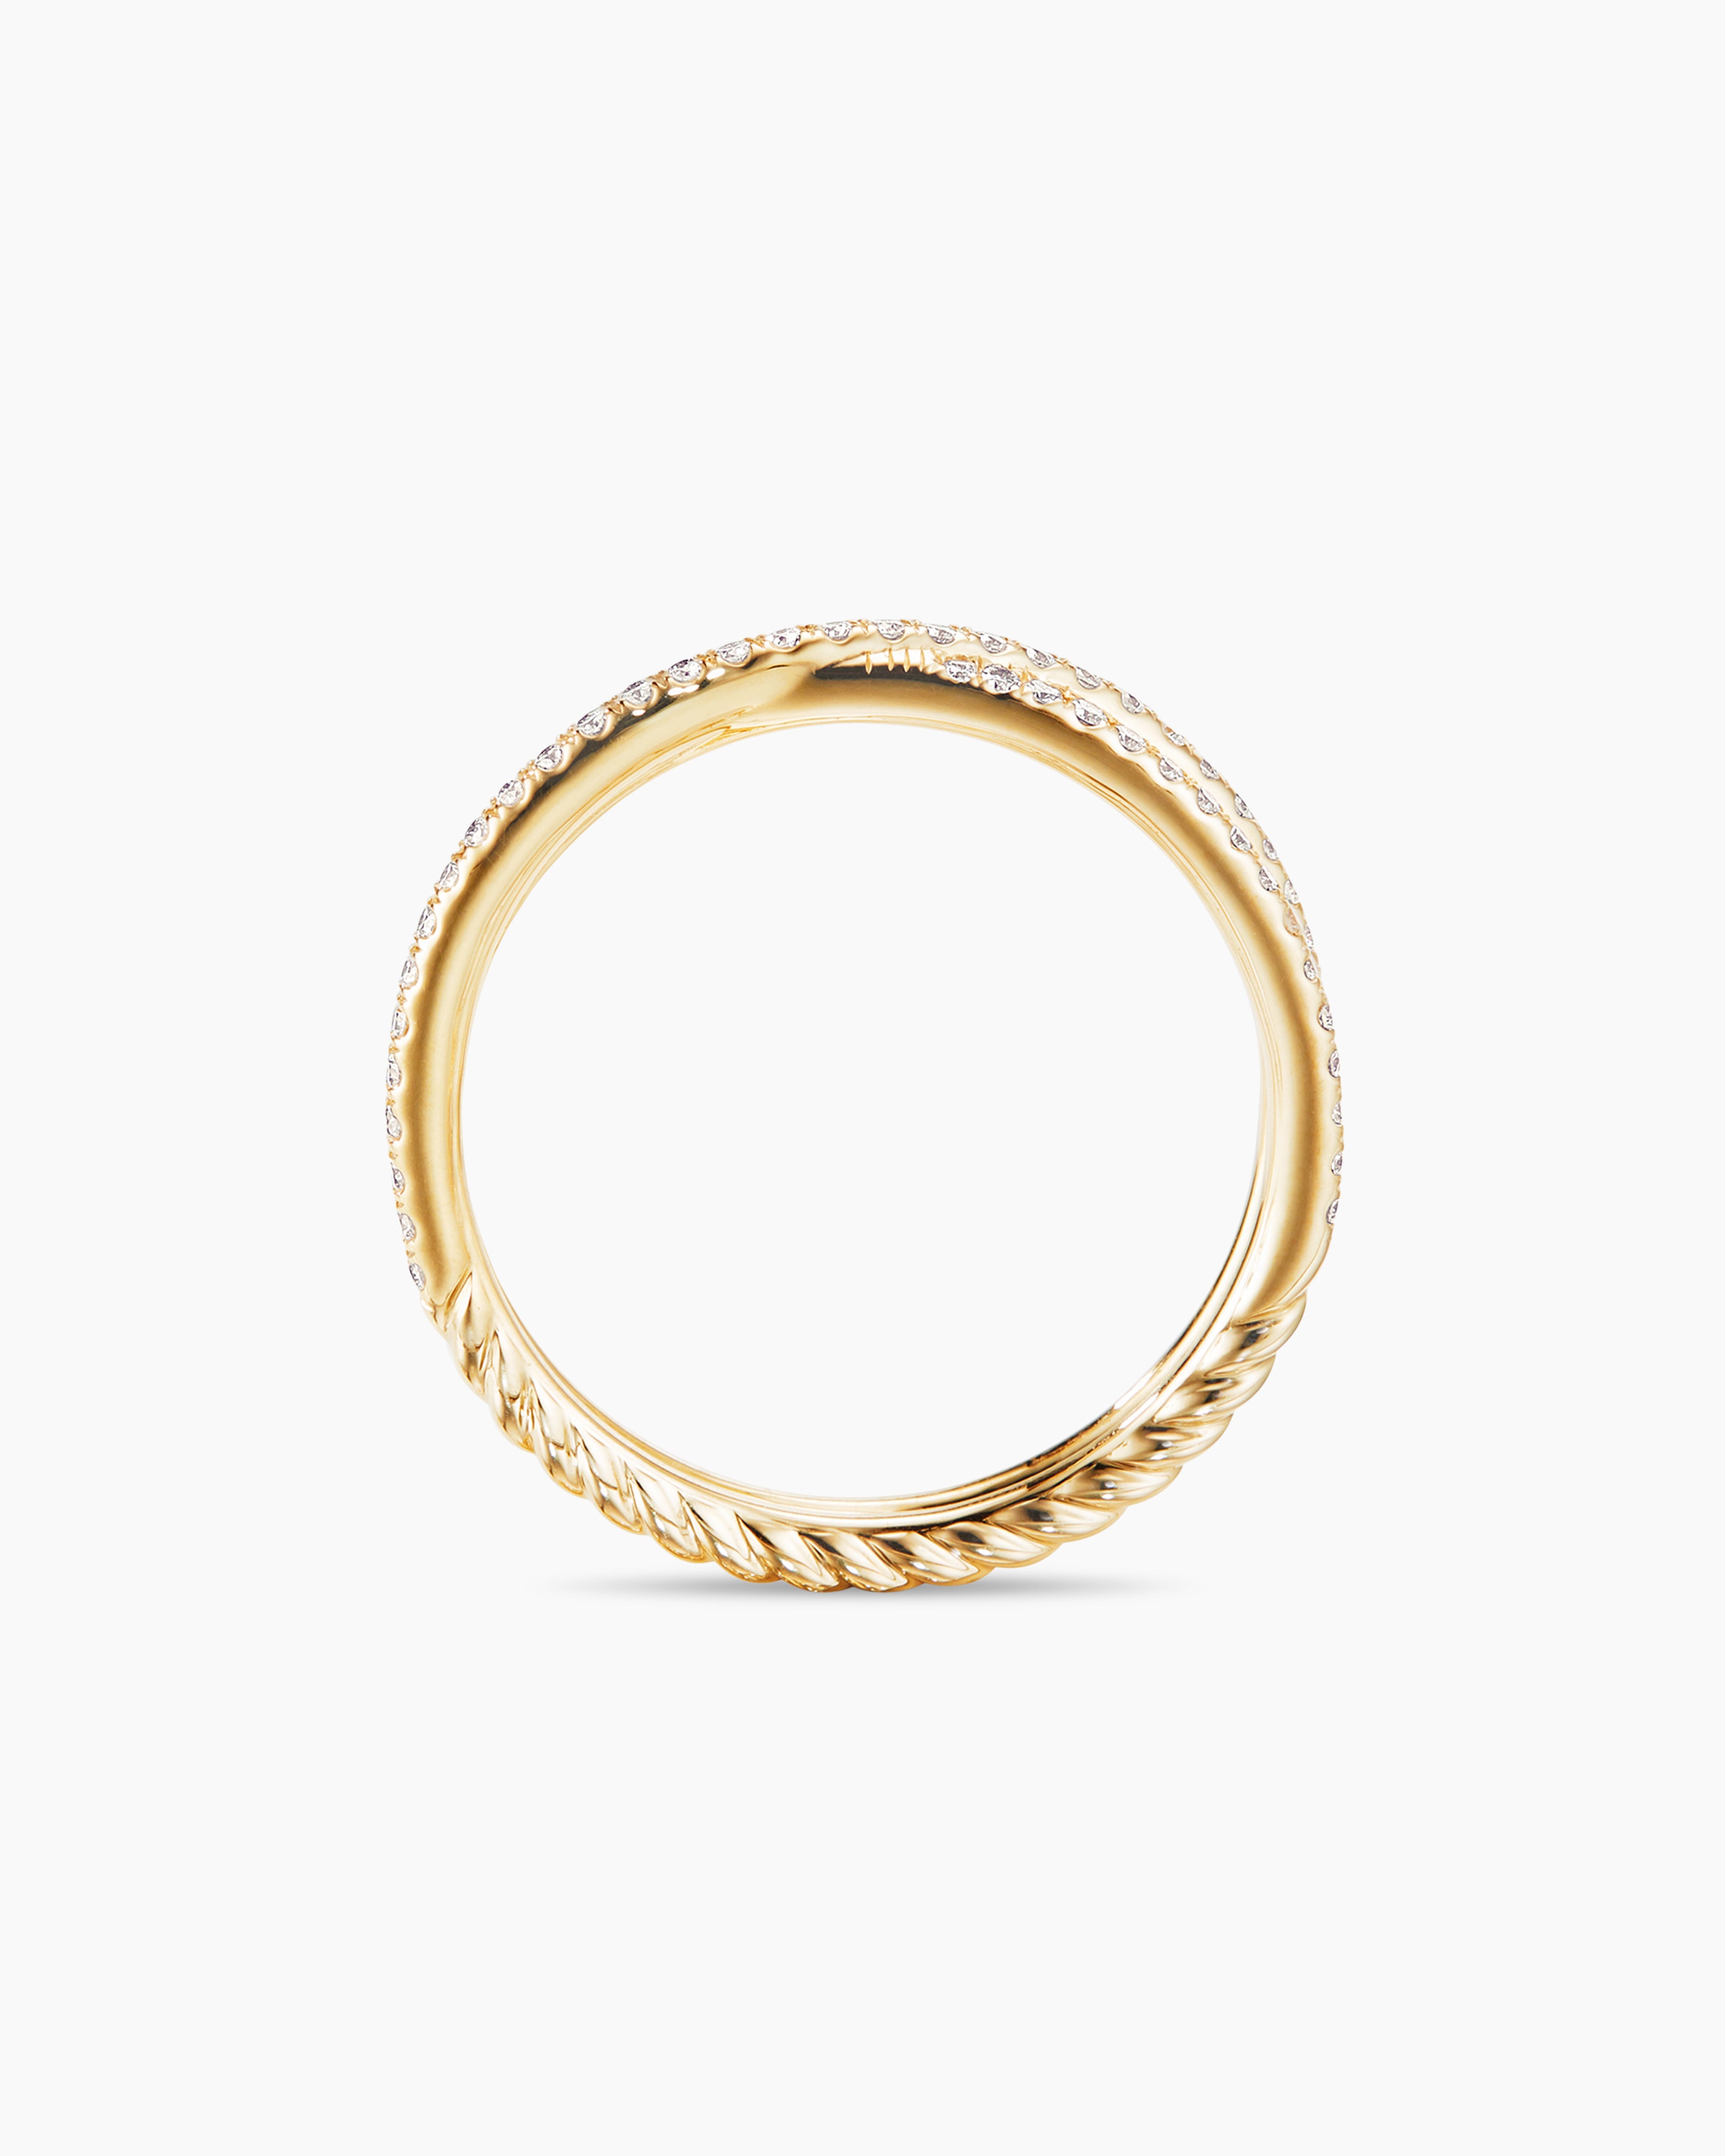 Rockman Jewelry Crux V Gold Key Ring (Small)